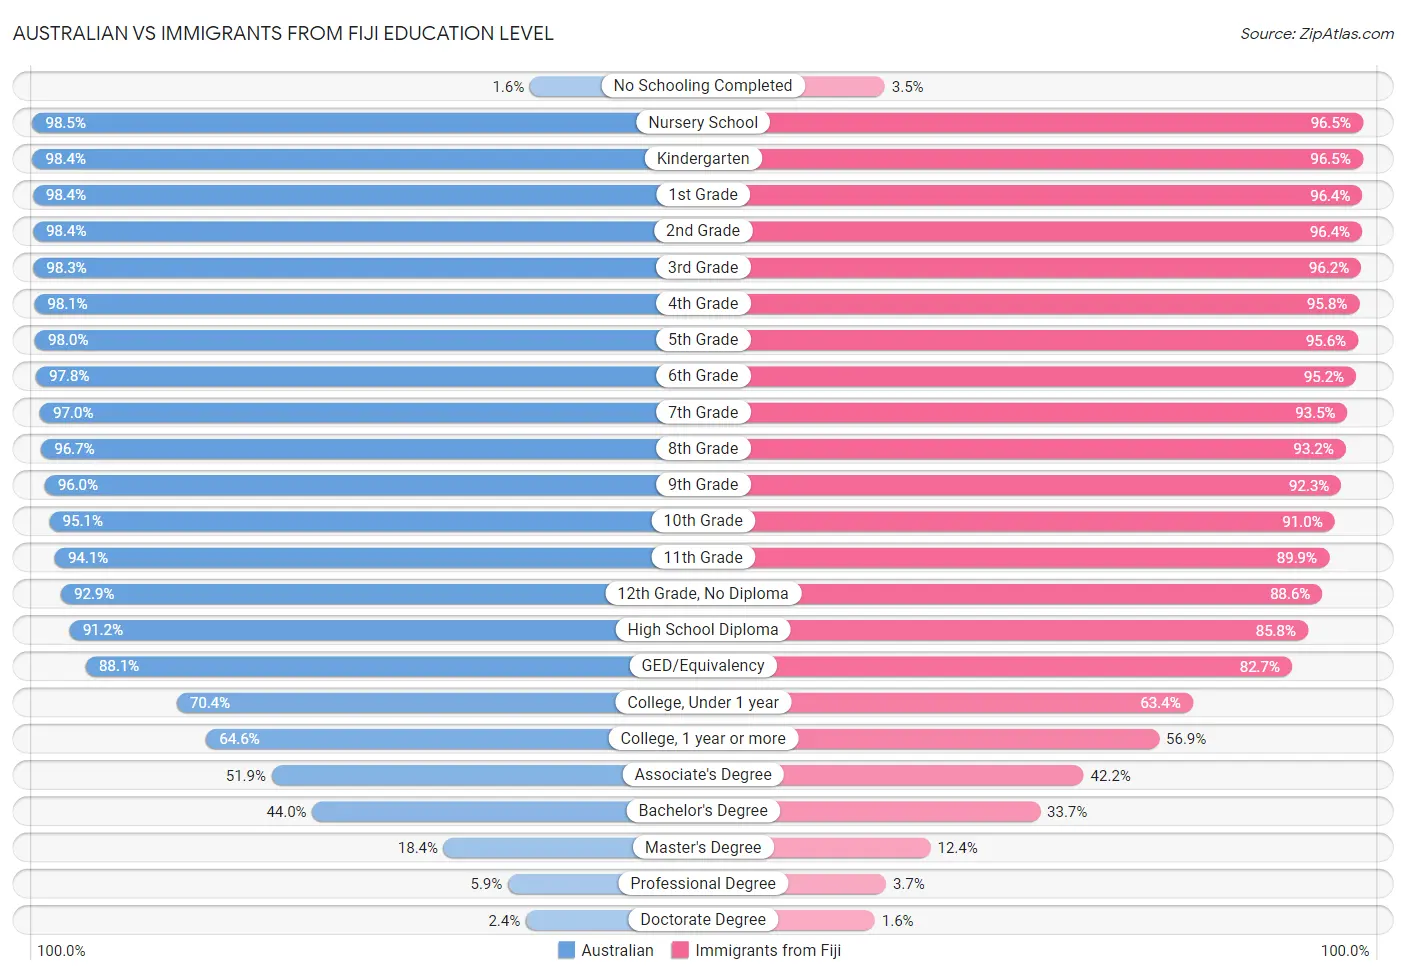 Australian vs Immigrants from Fiji Education Level